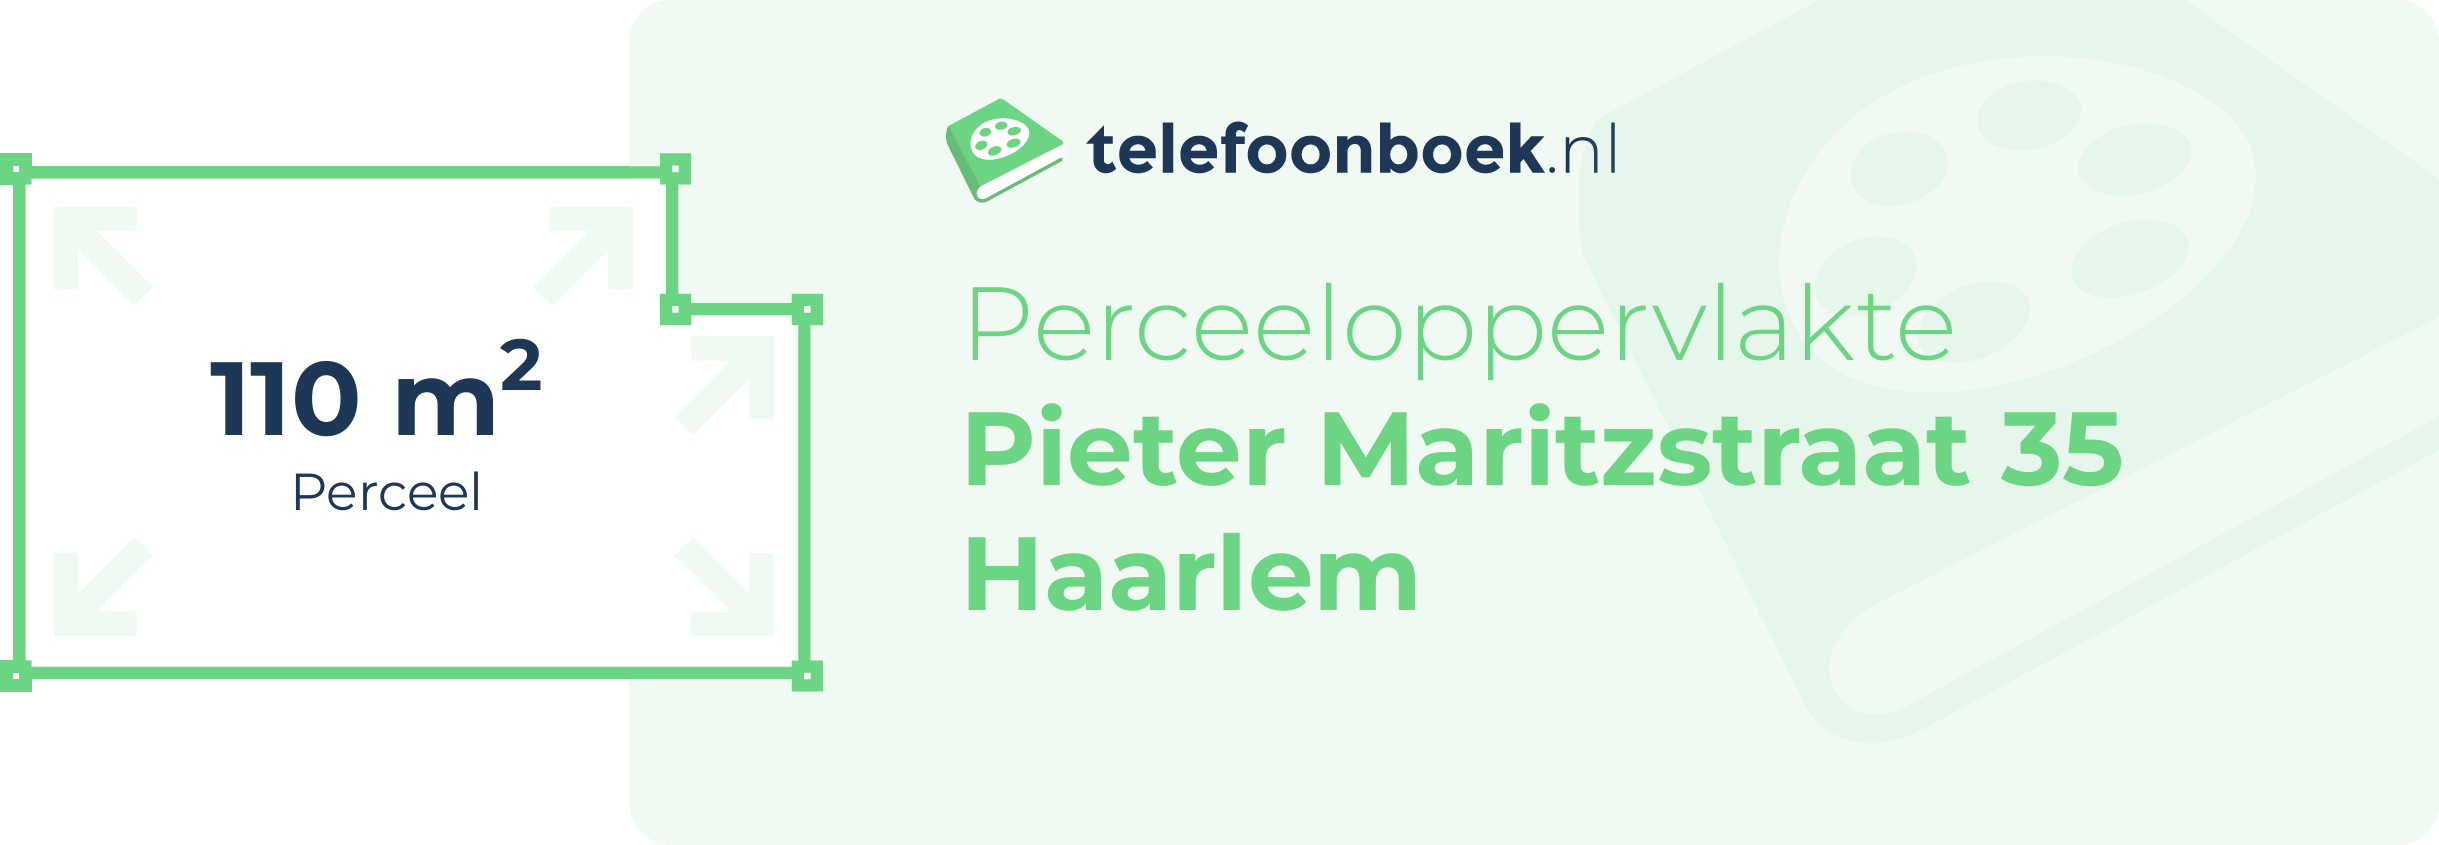 Perceeloppervlakte Pieter Maritzstraat 35 Haarlem